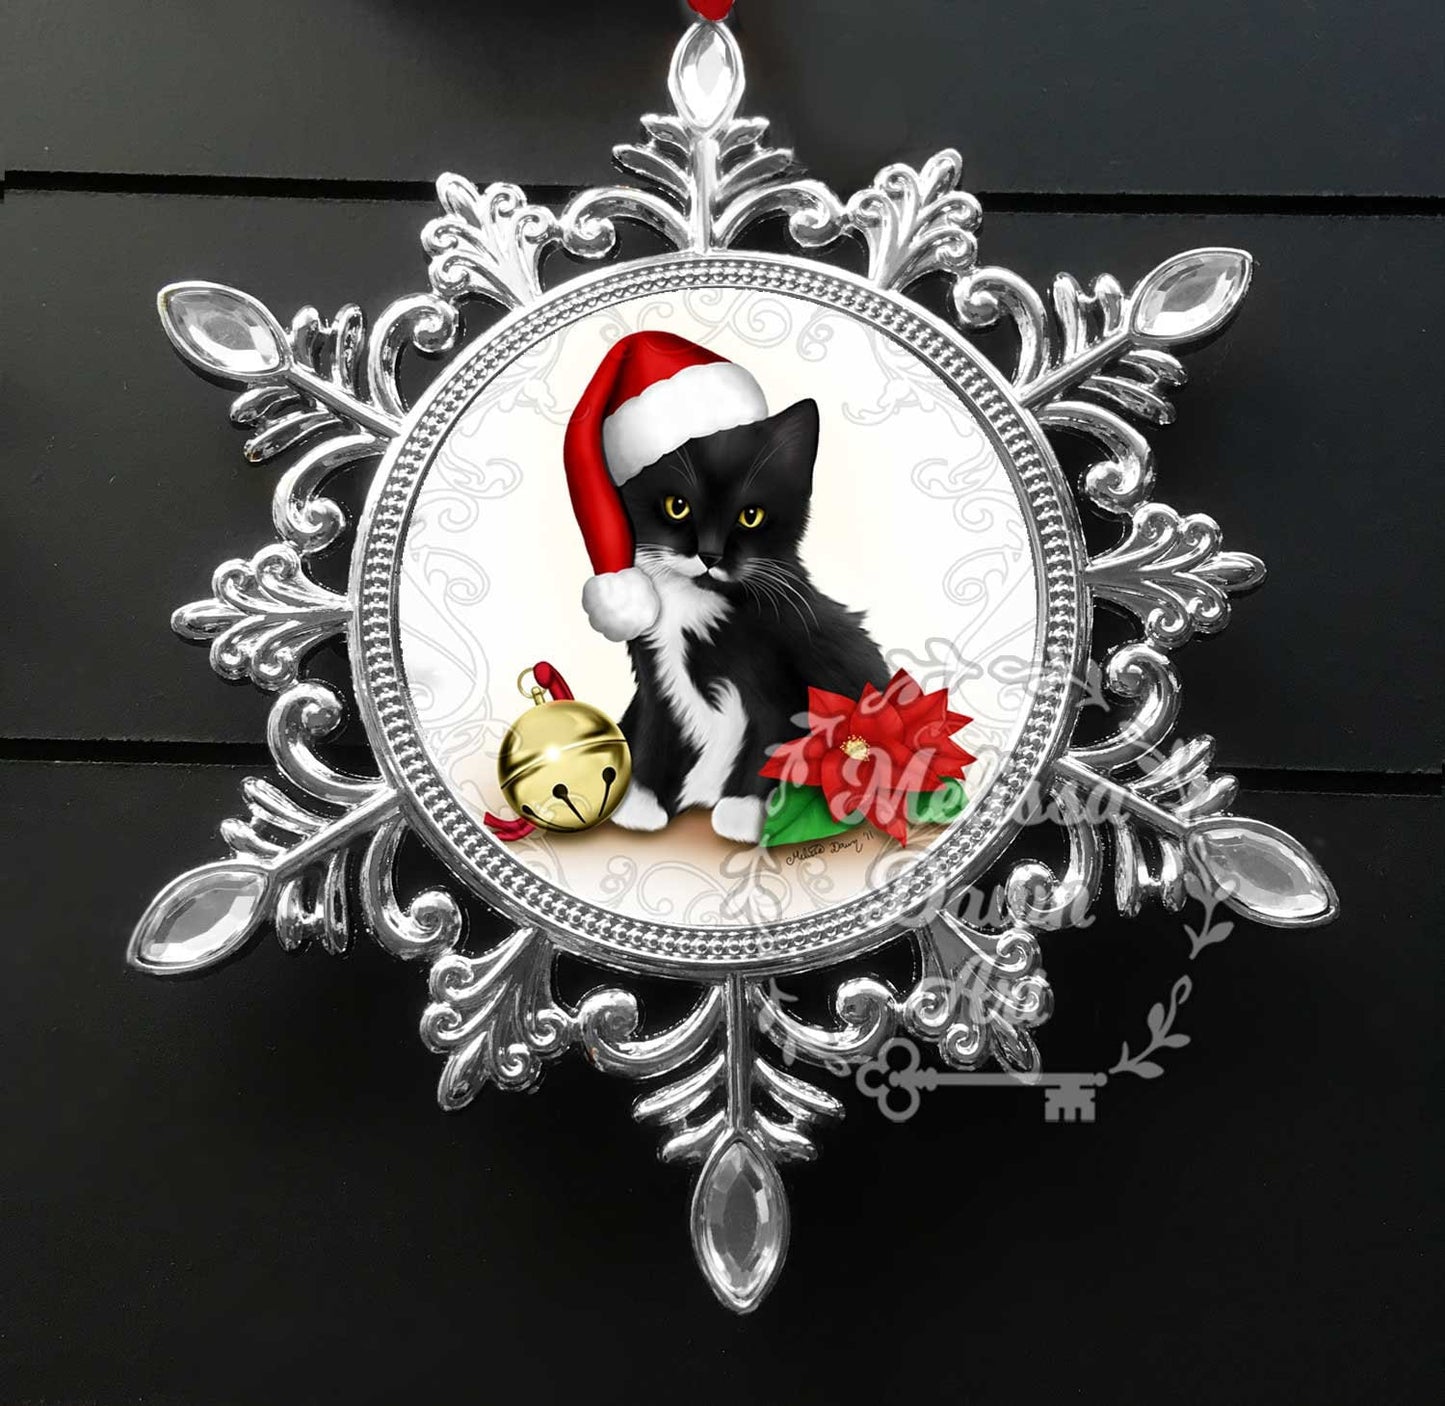 Custom Cat Ornament / Cat Ornament / Cat Lovers Gift / Tuxedo Cat Ornament / Santa Cat Ornament / Santa Claws / Tuxedo / Snowflake Ornament